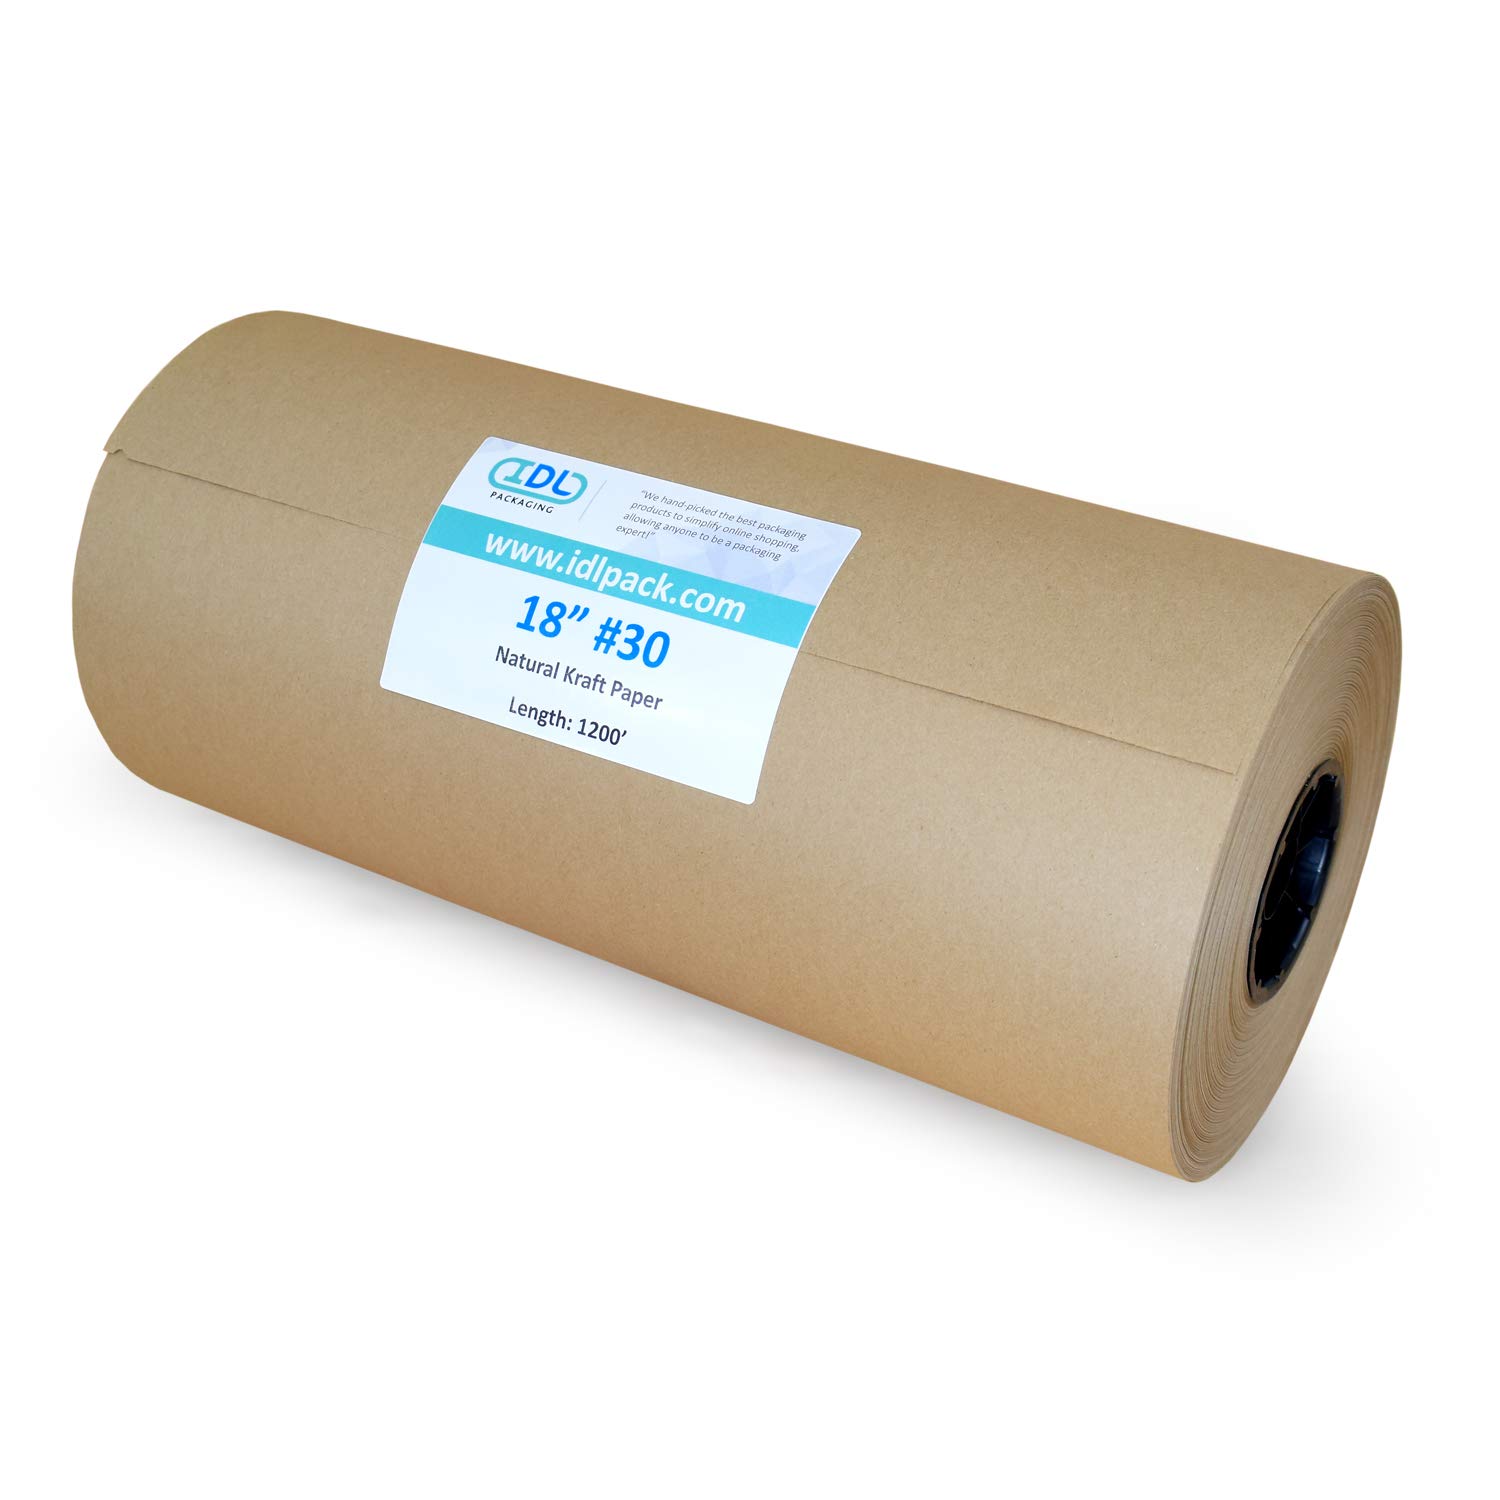 IDL Packaging Large Brown Kraft Paper Roll 18 x 1200' - Natural